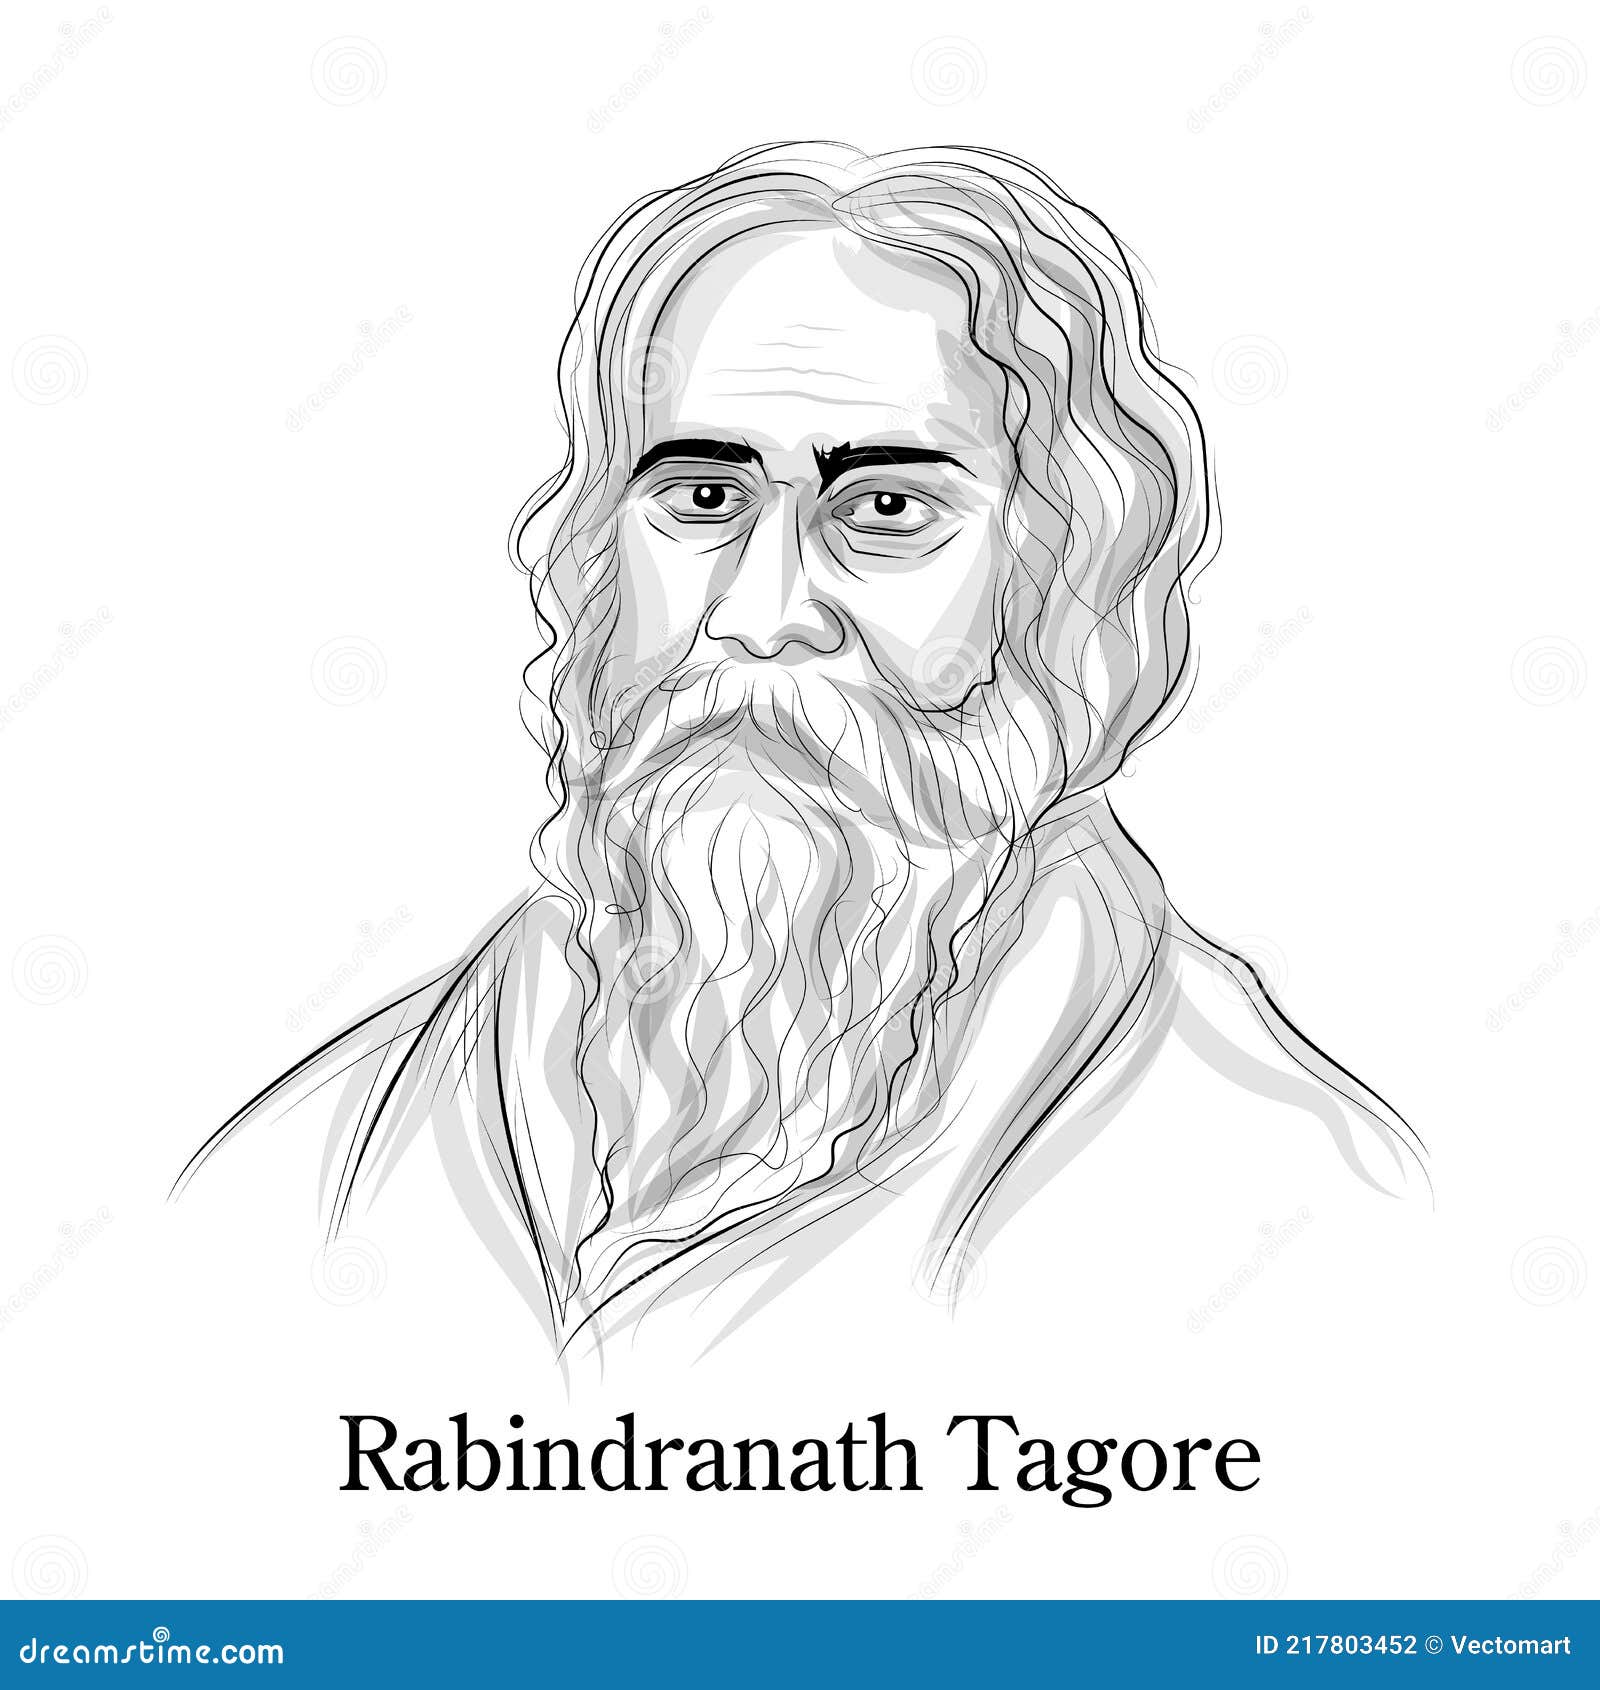 Young Rabindranath Tagore  Digital Art  Tallenge Motivational Collection  by Megaduta Sharma  Buy Posters Frames Canvas  Digital Art Prints   Small Compact Medium and Large Variants